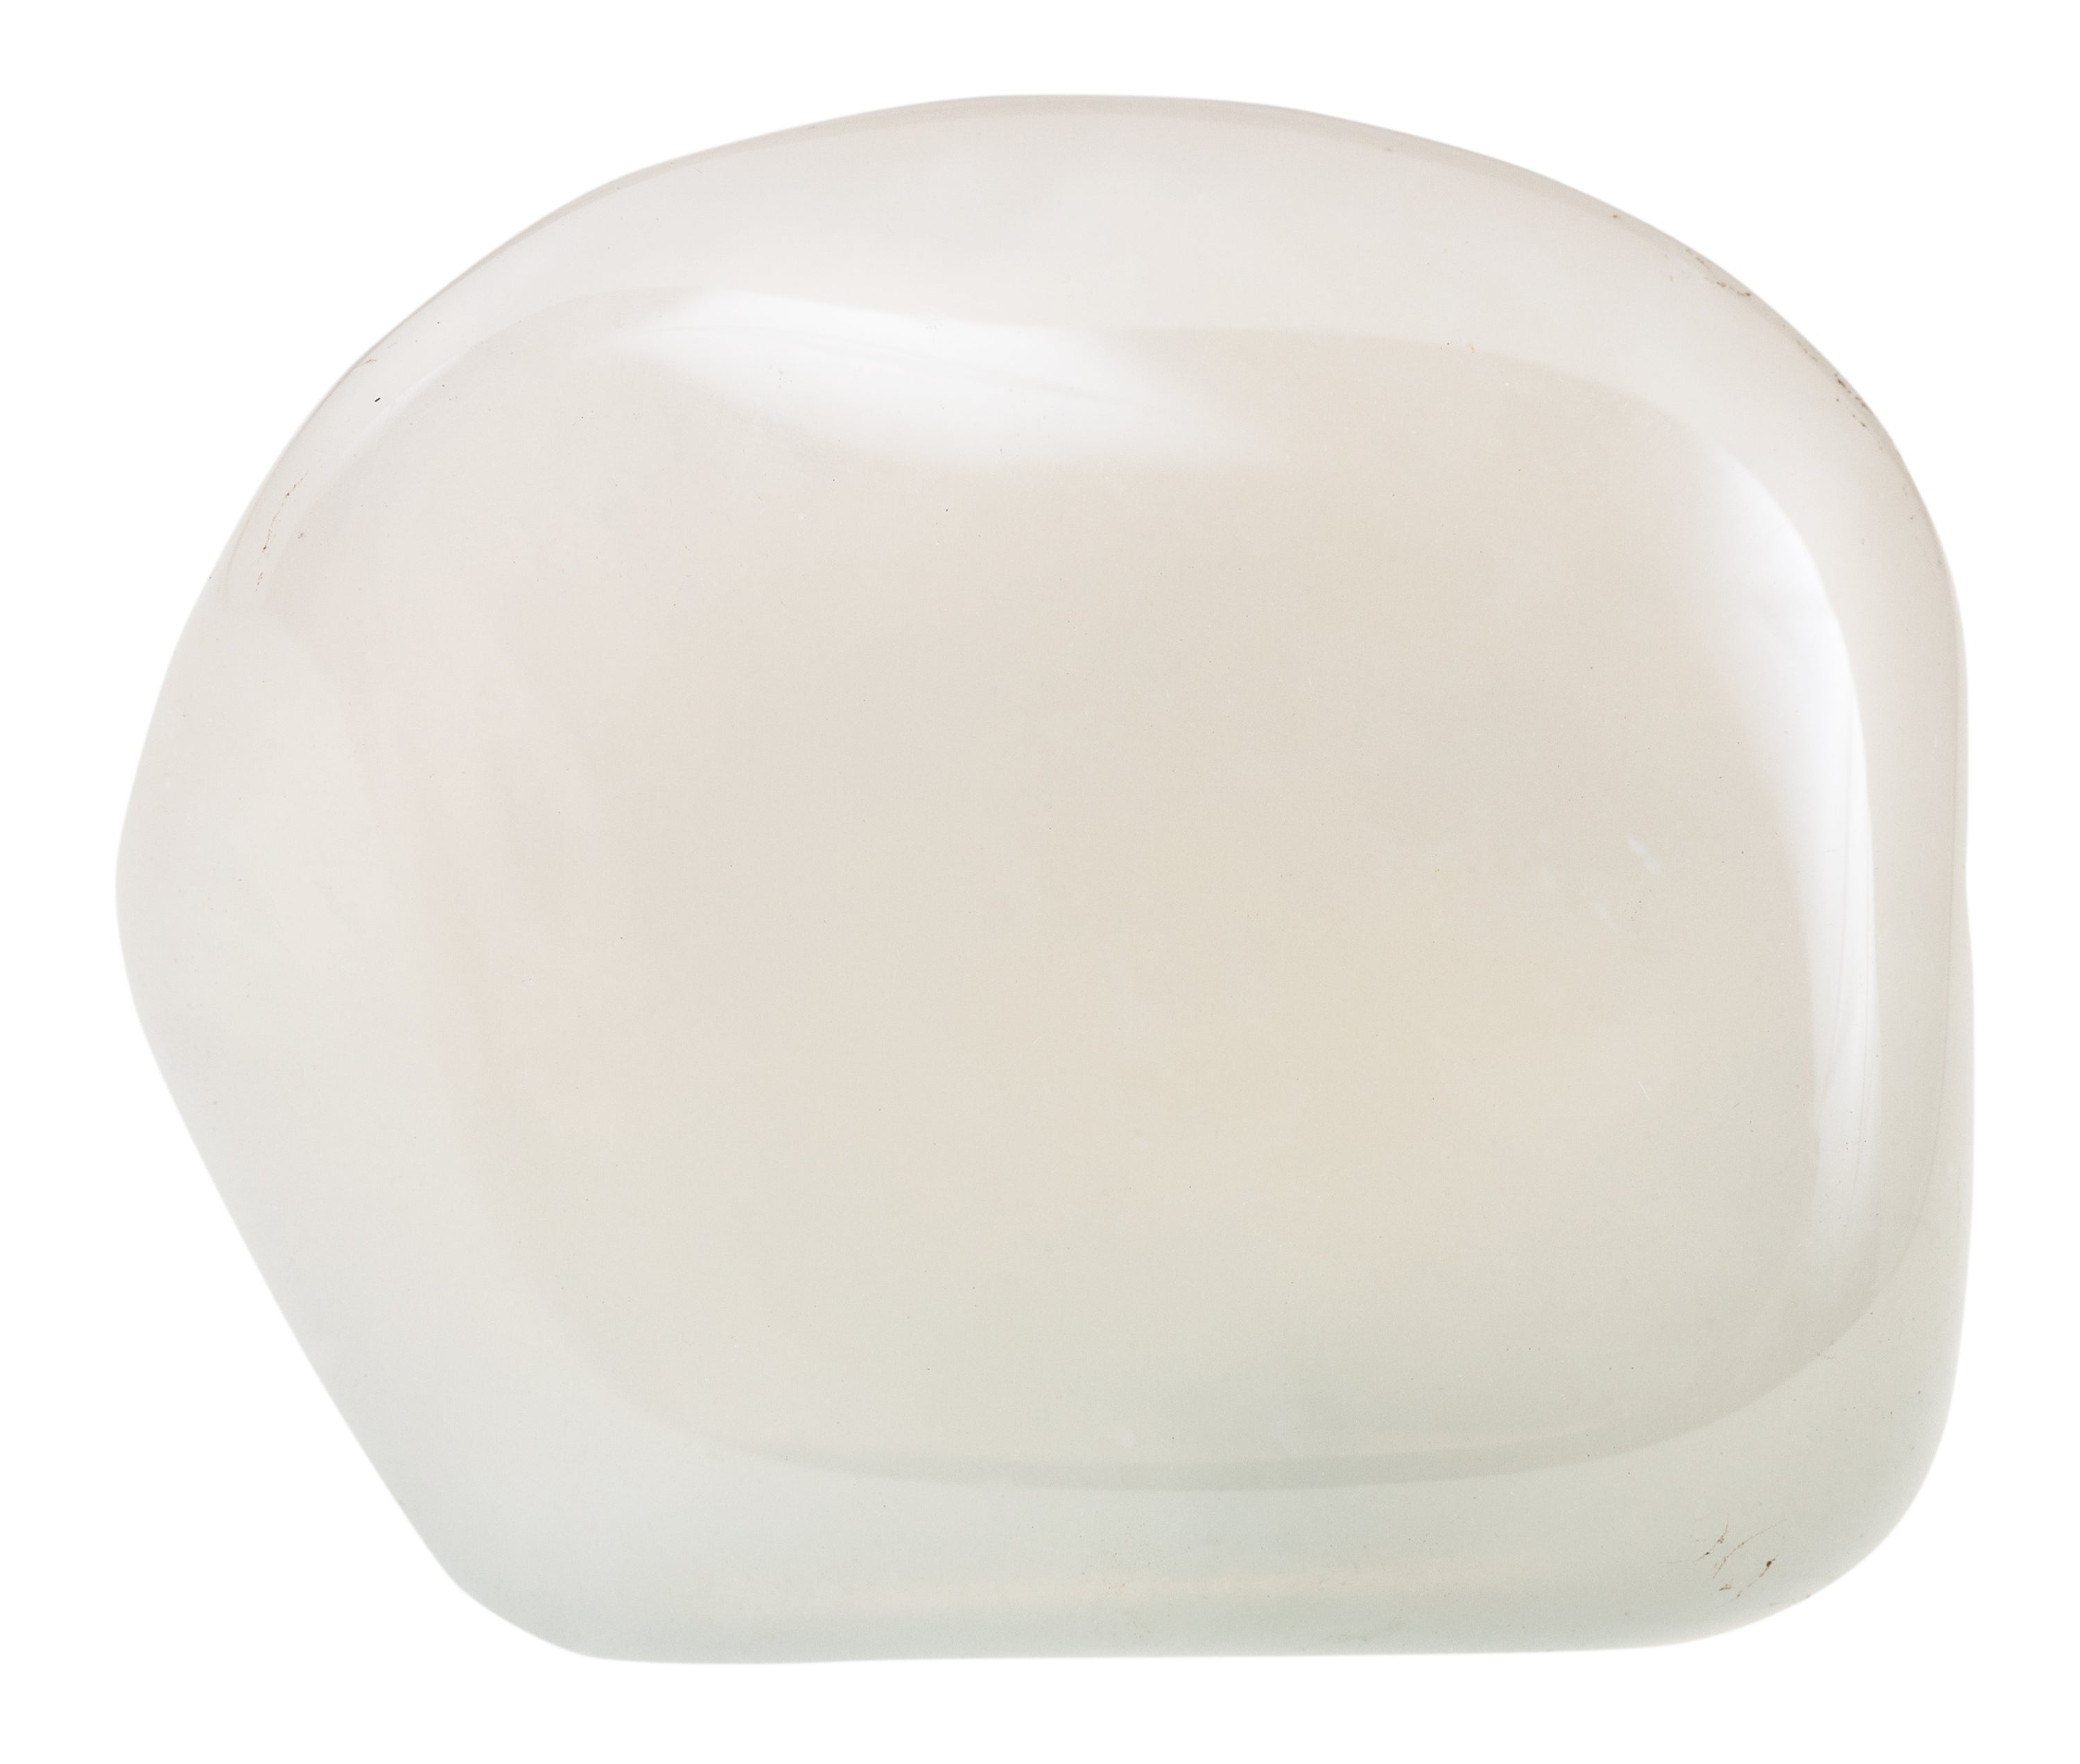 white agate stone